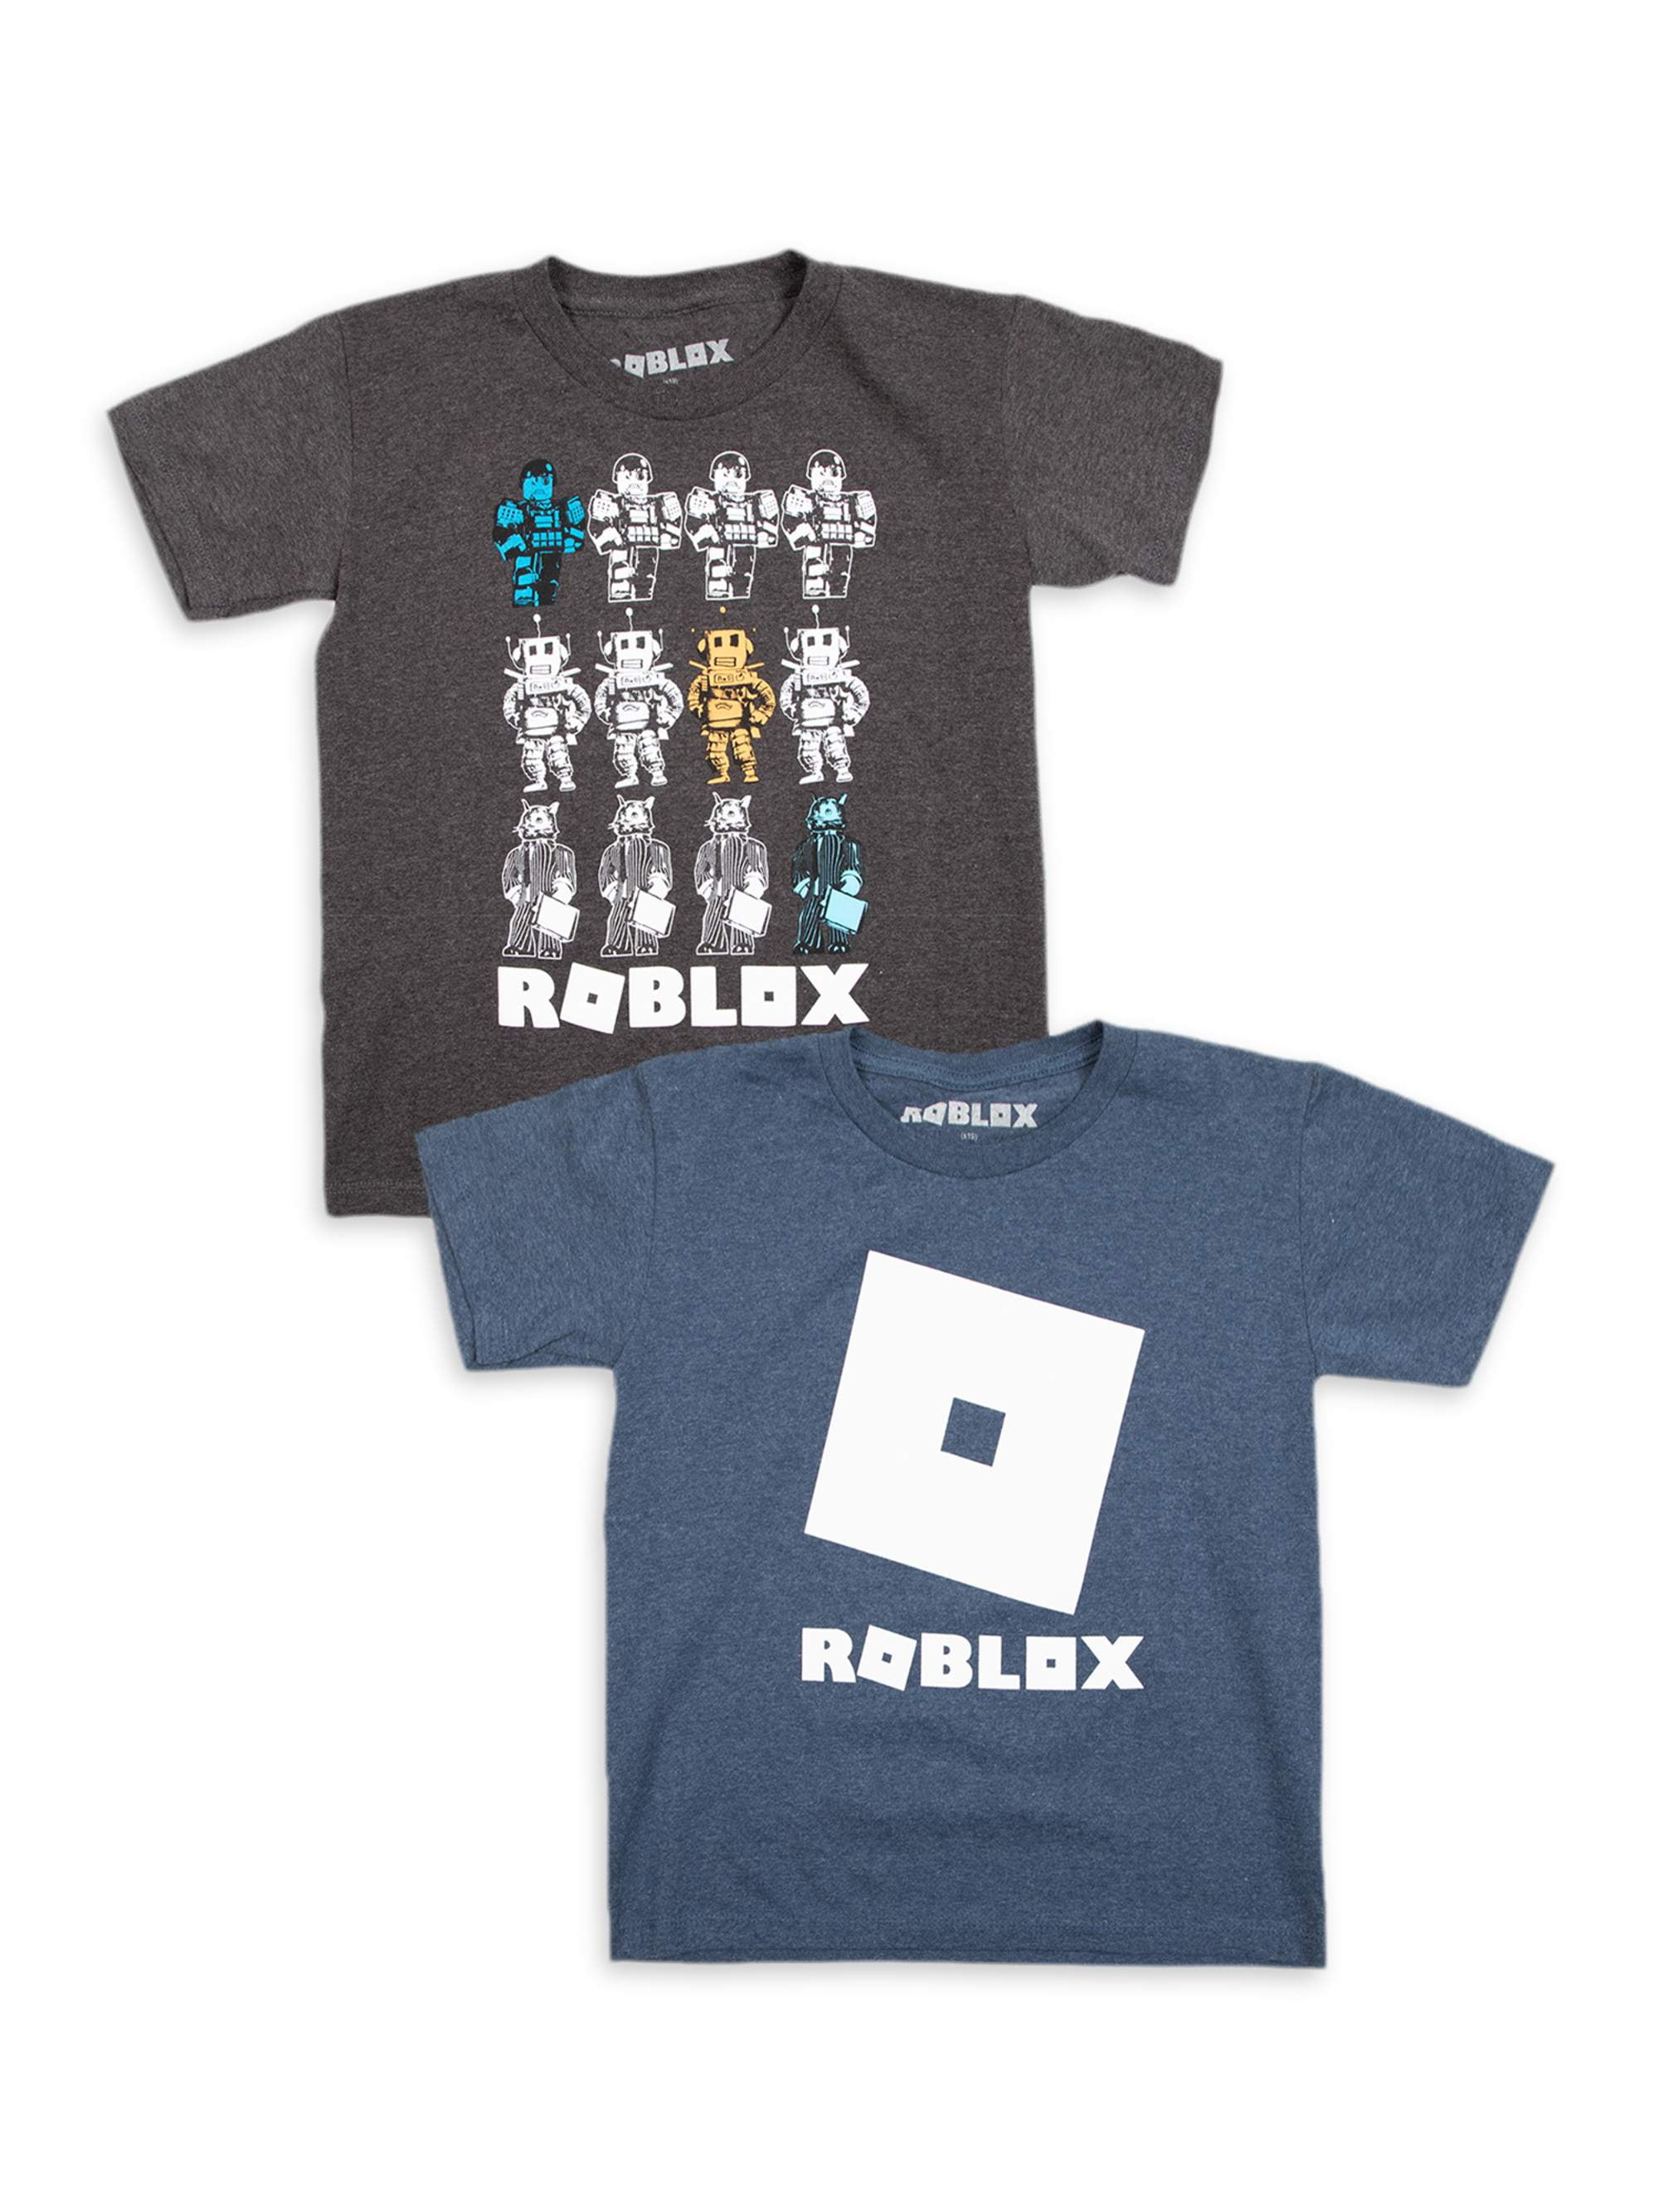 Boy Shirt Code For Roblox